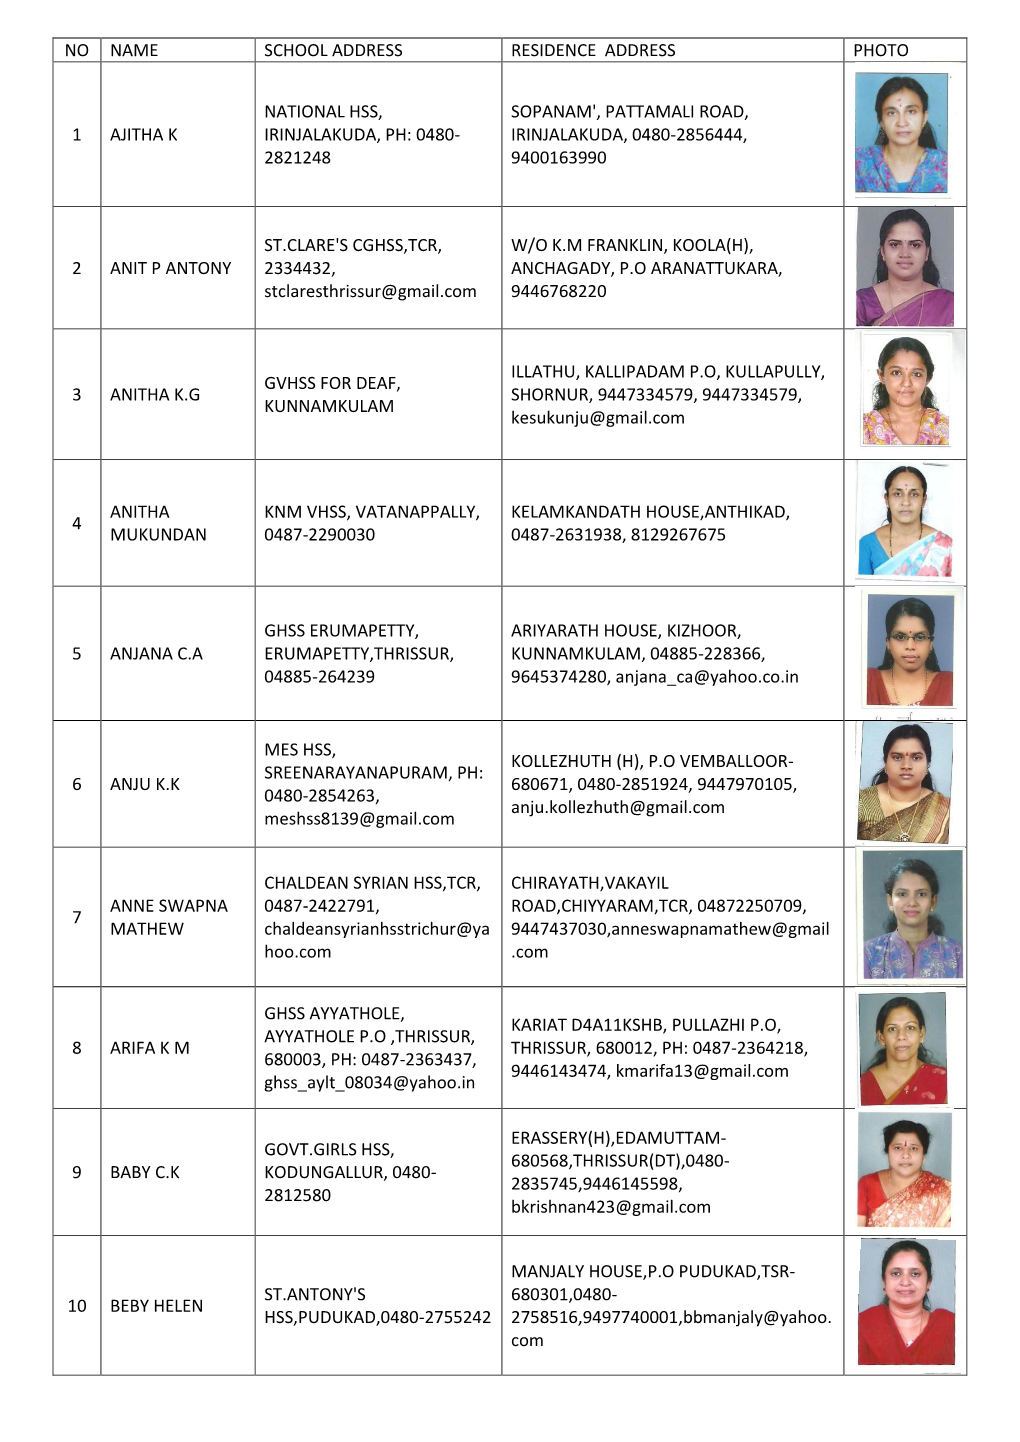 No Name School Address Residence Address Photo 1 Ajitha K National Hss, Irinjalakuda, Ph: 0480- 2821248 Sopanam', Pattamali